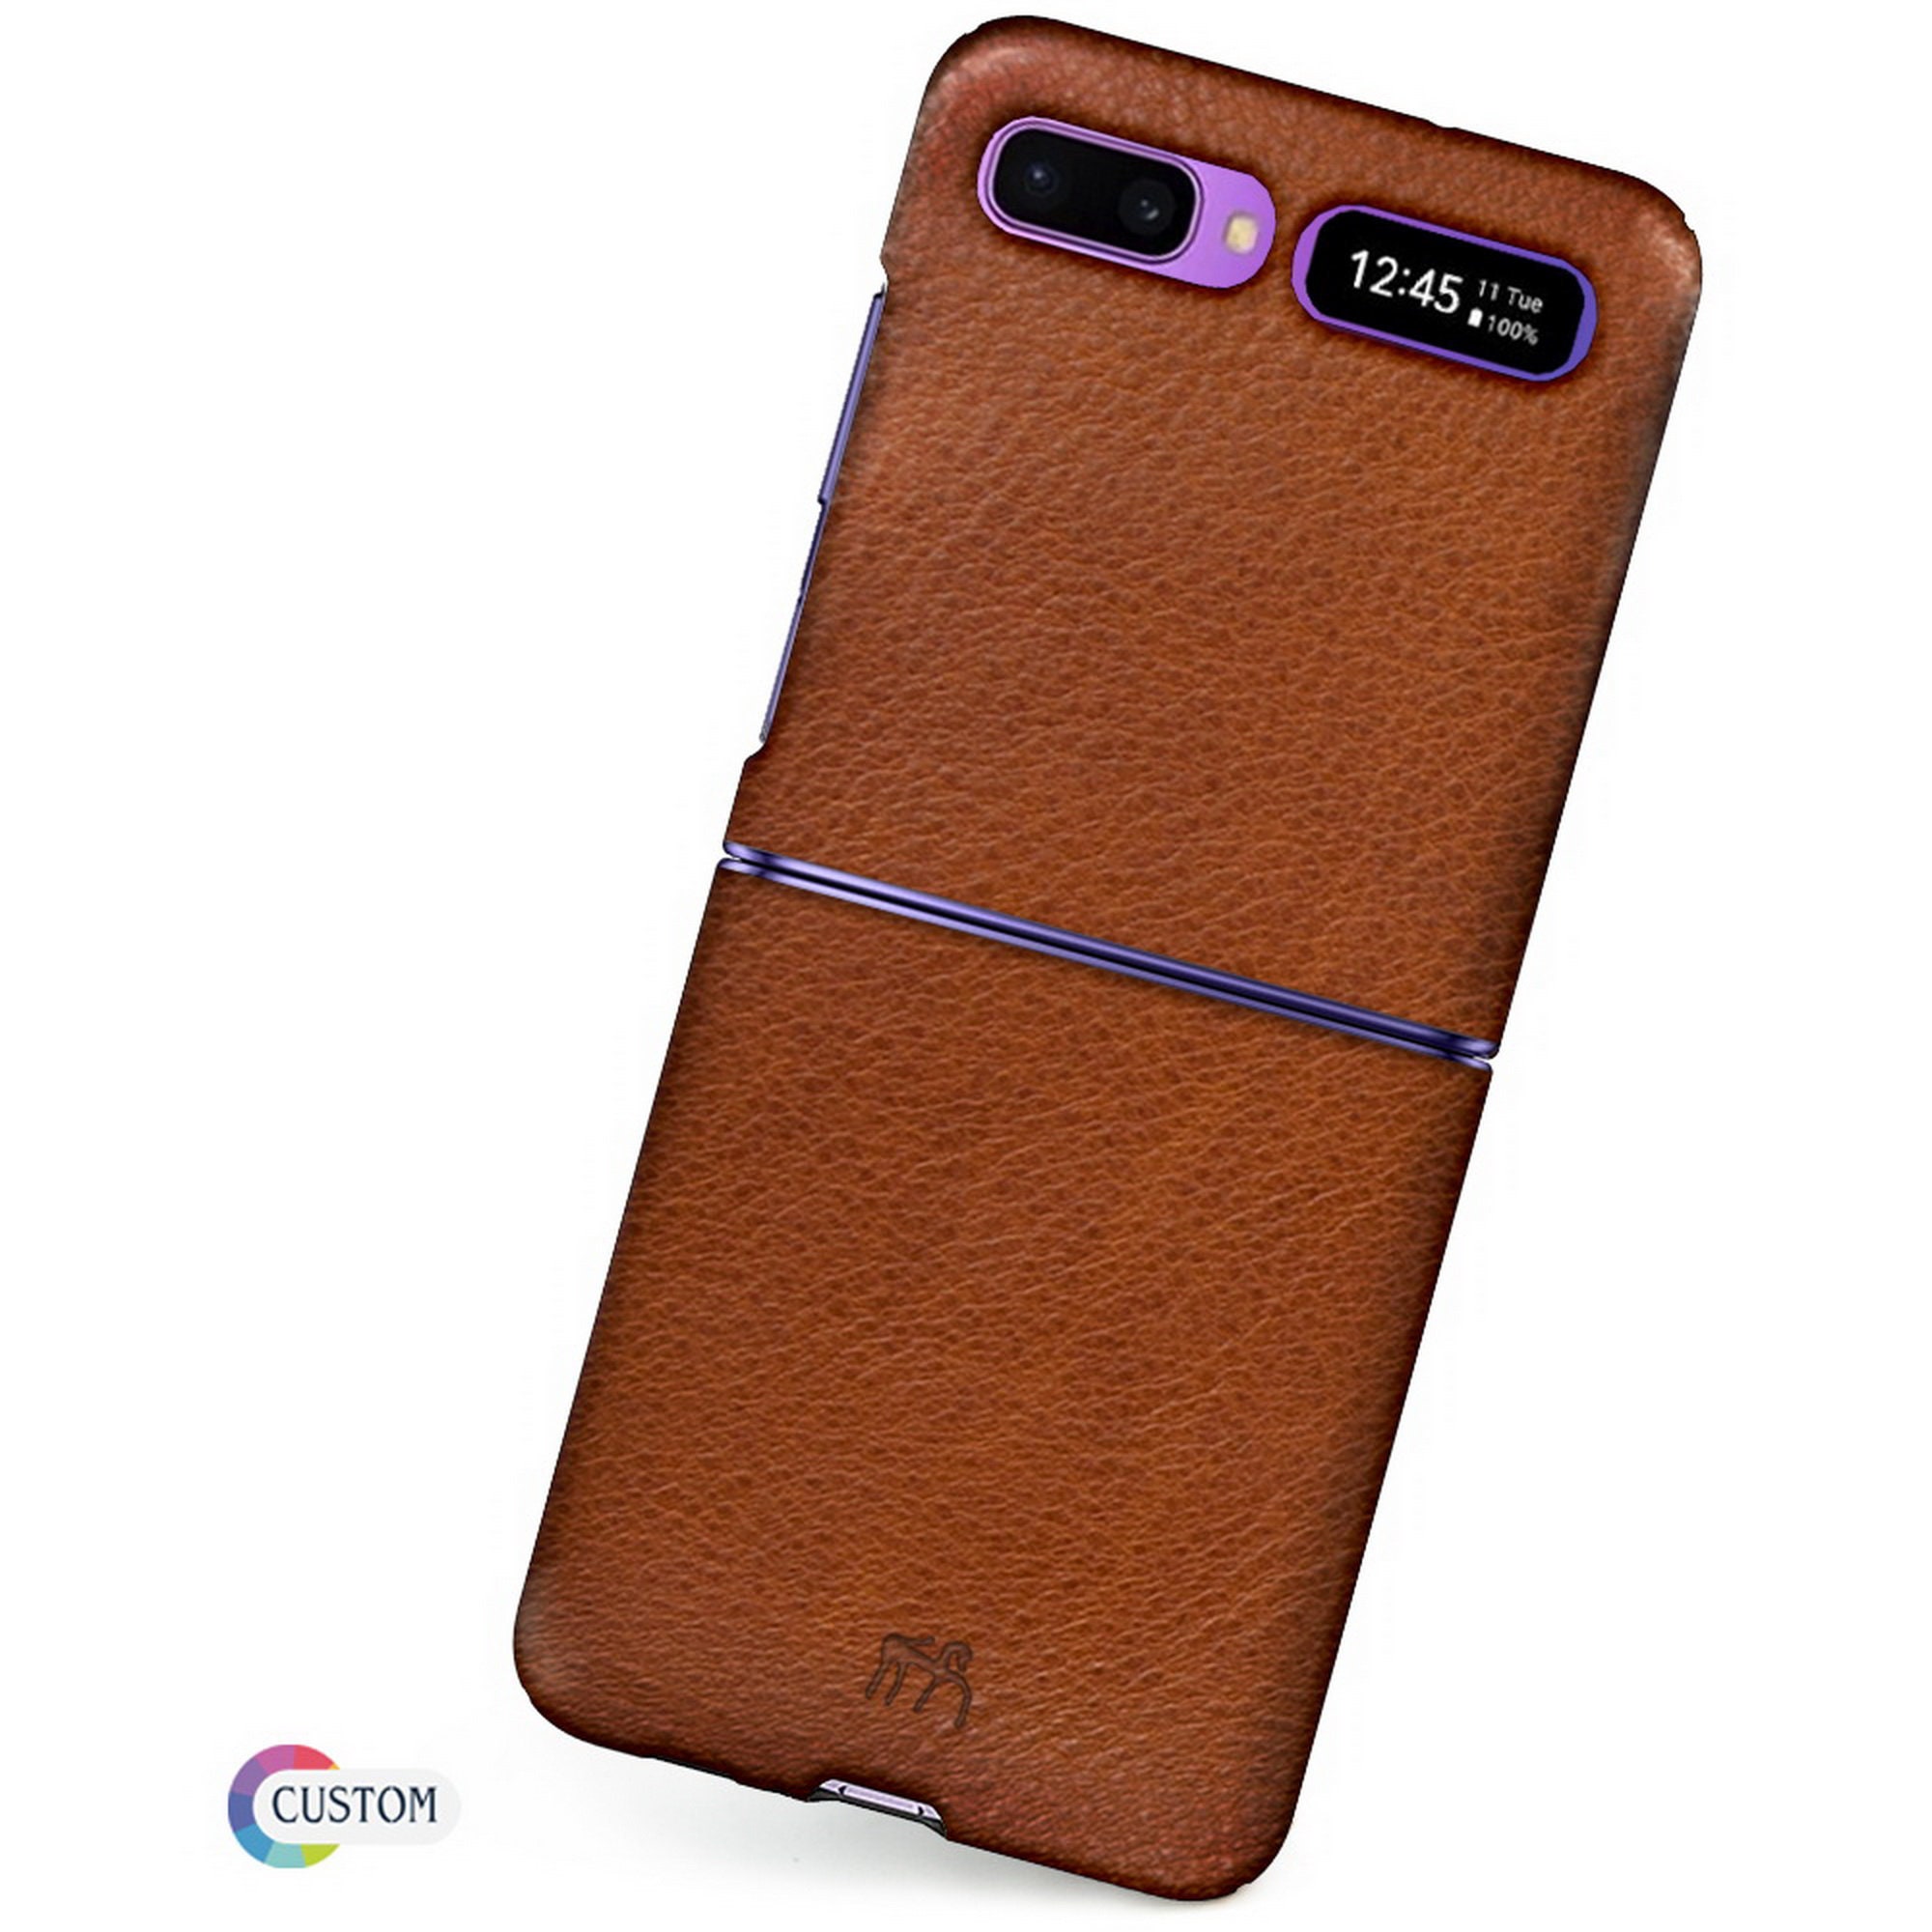 wowacase Square Leather Samsung Galaxy Z Flip3 Case (Color: White)